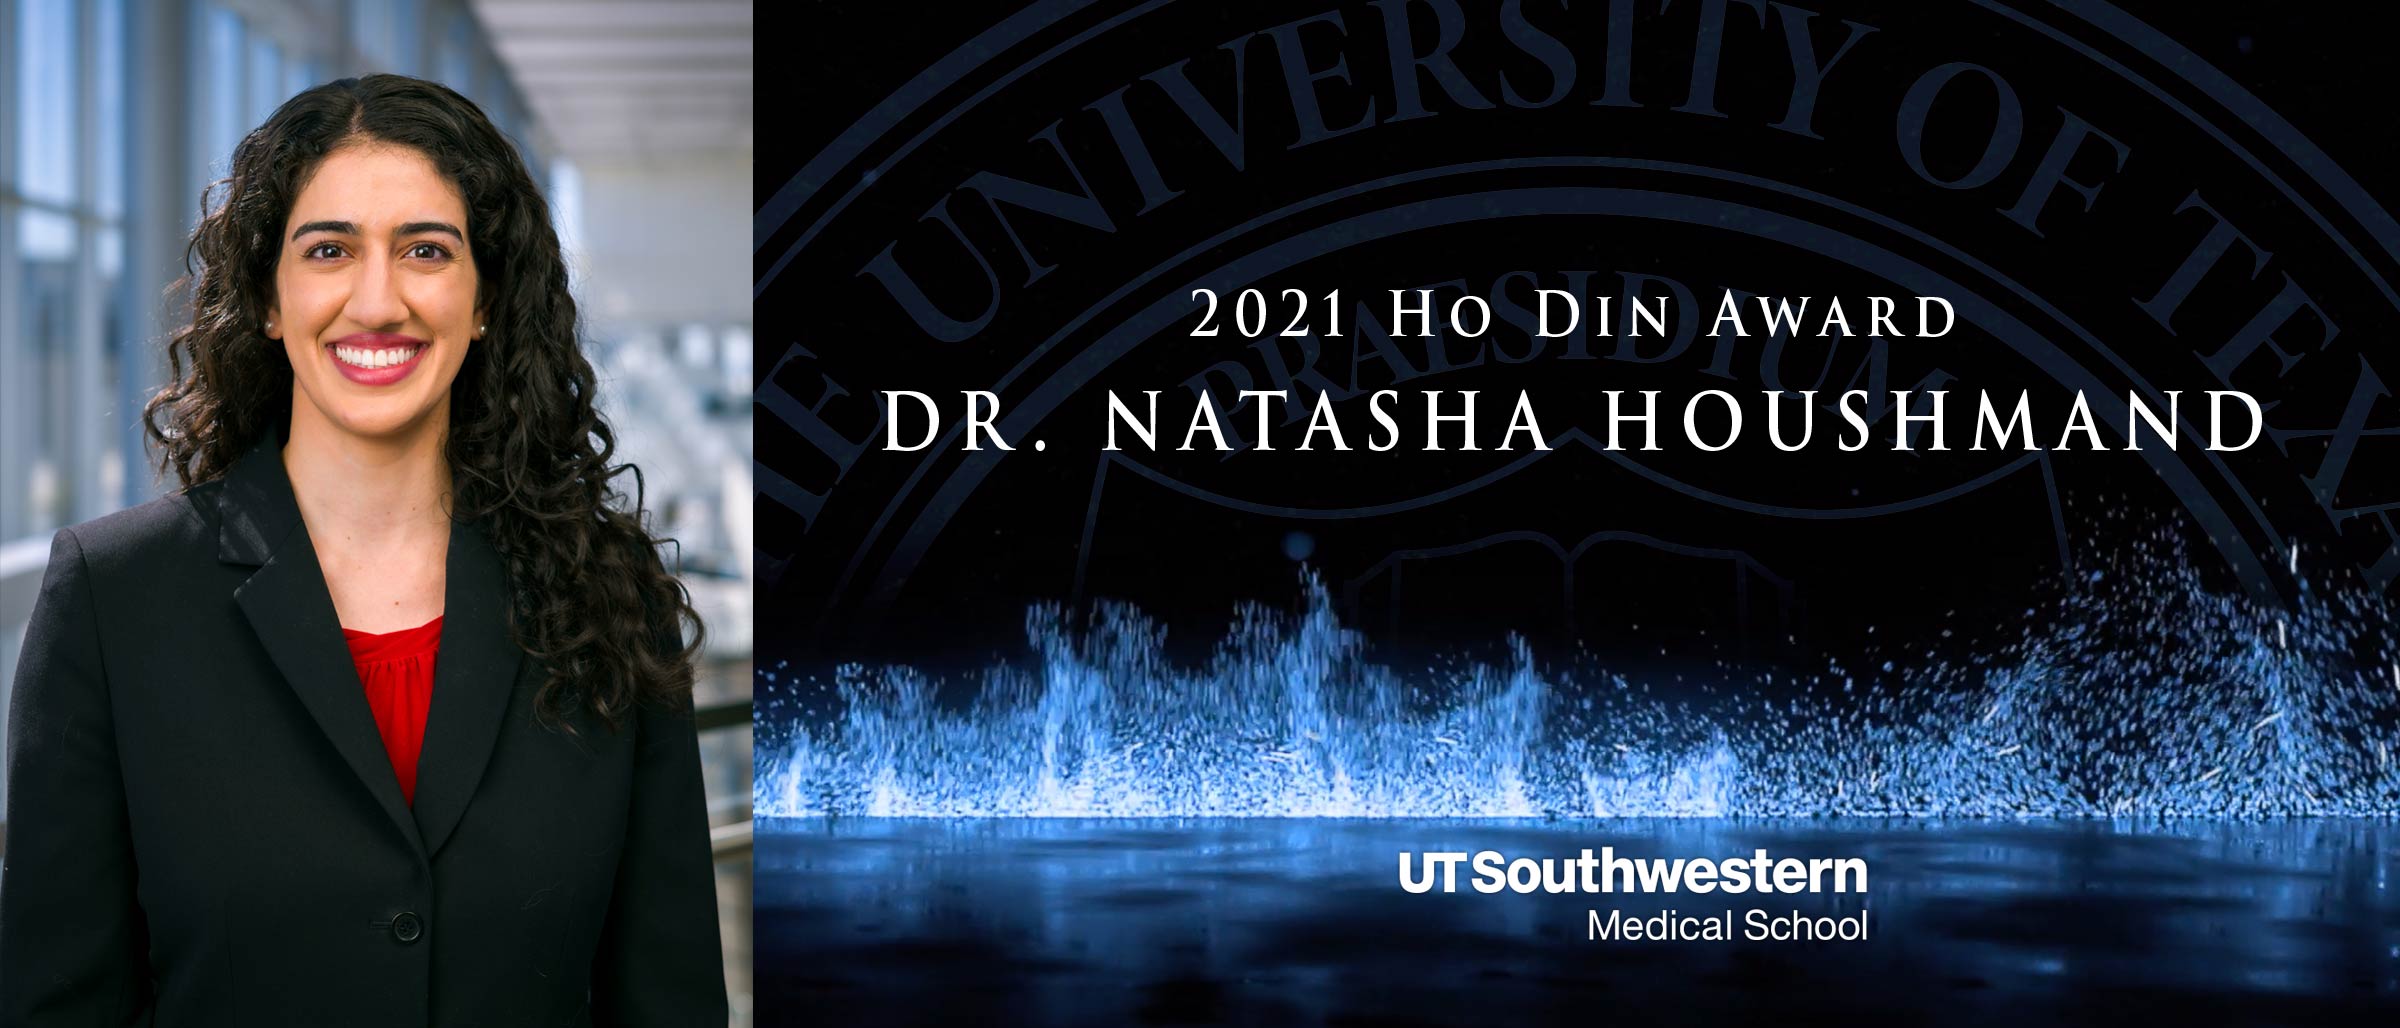 Woman in black suit jacket, Dr. Natasha Houshmand